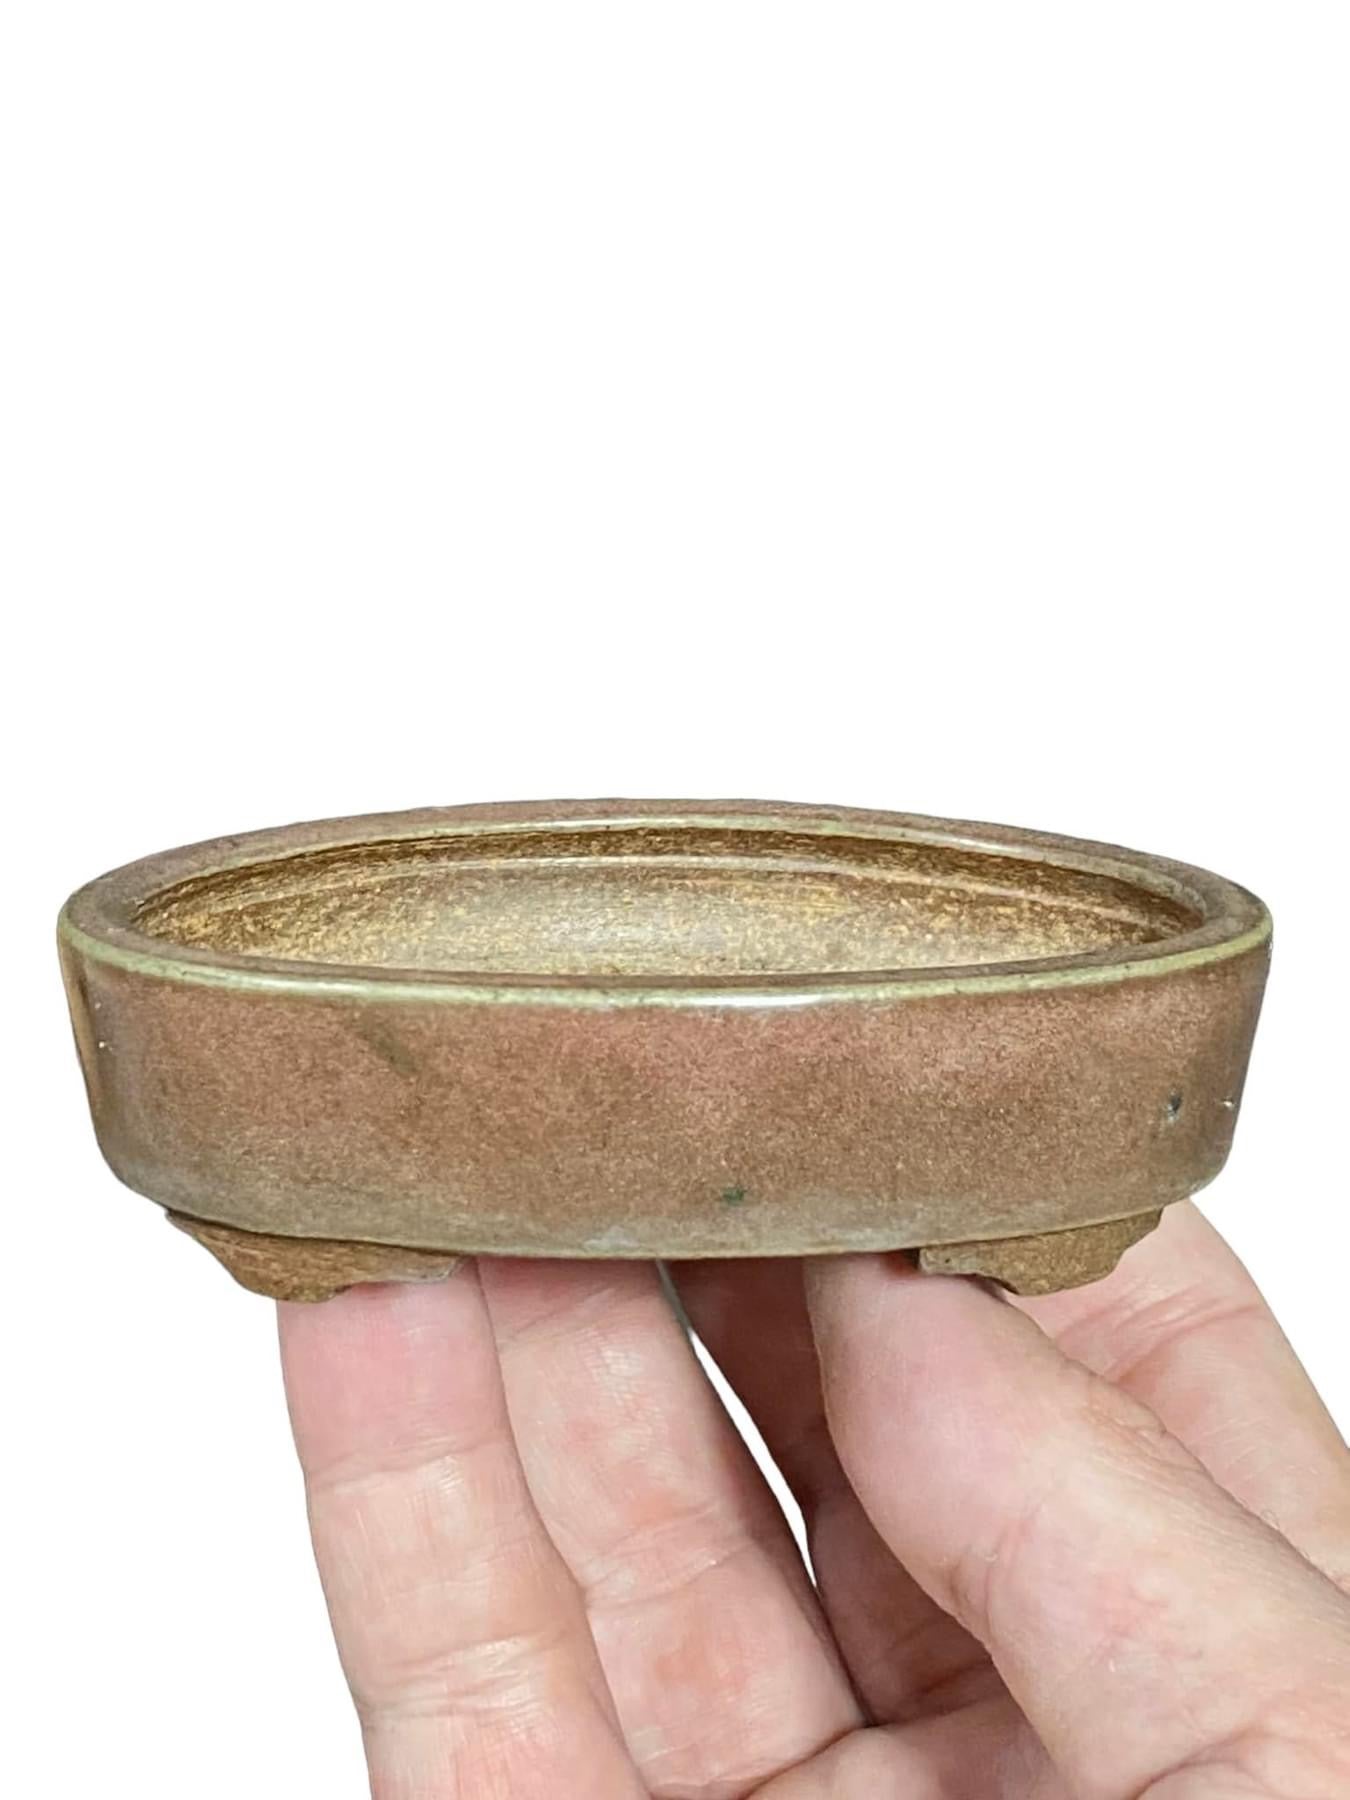 Heian Kosen - Rare and Old Oval Bonsai Pot